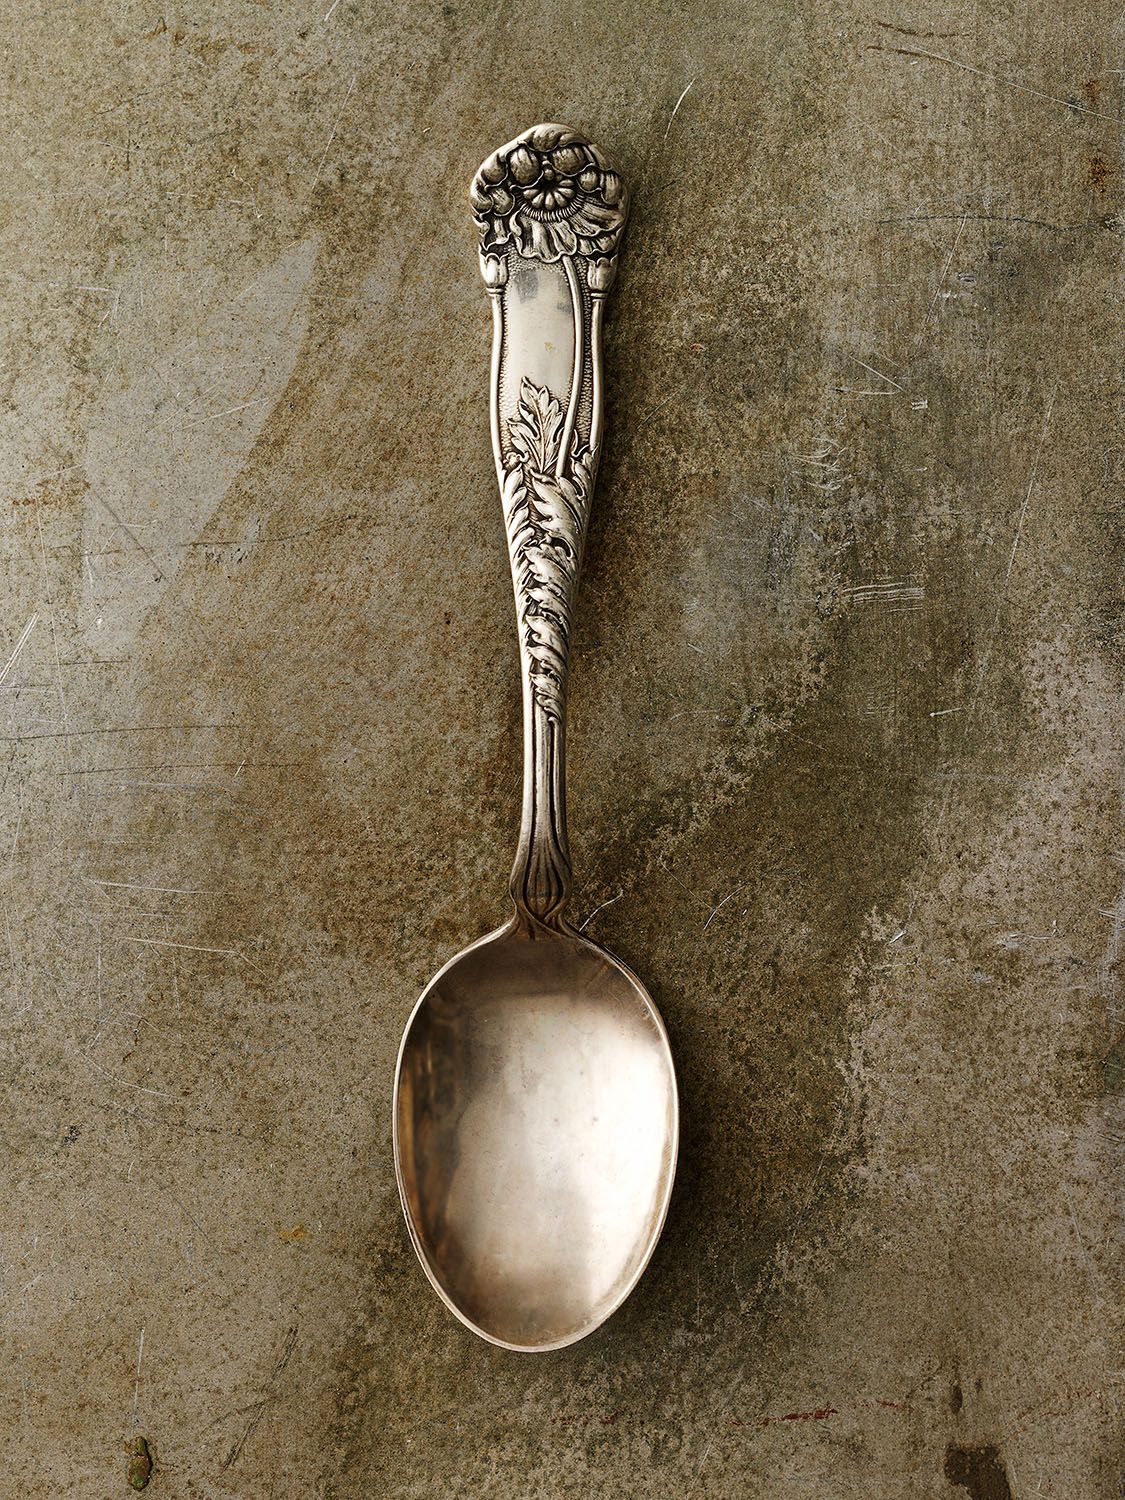 #20 Small Silver Spoon